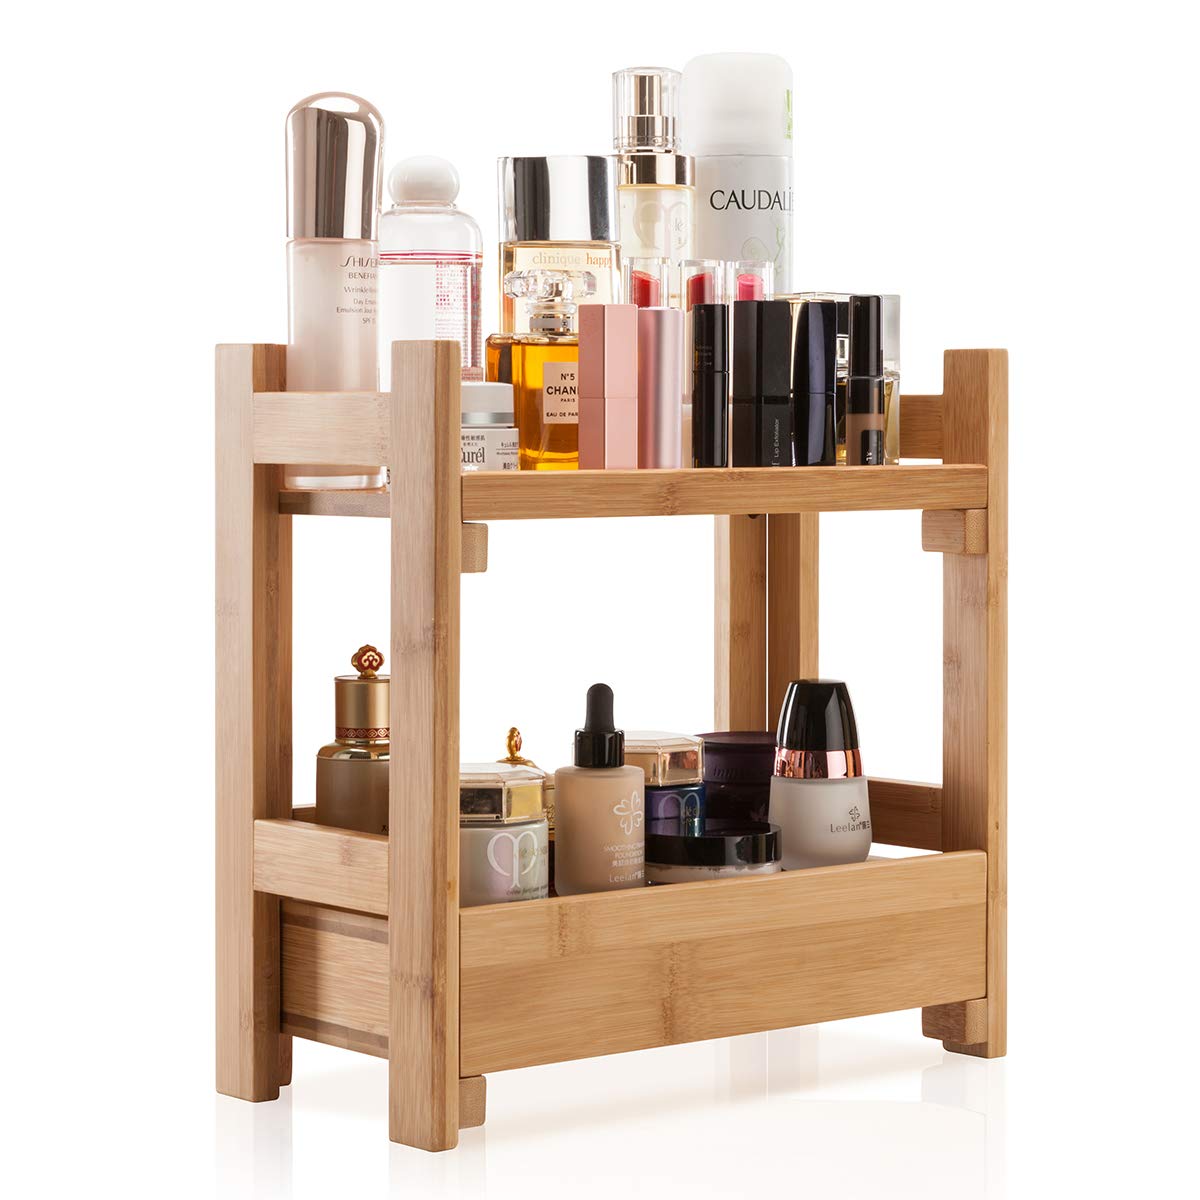 GOBAM Makeup Organizer Holder Cosmetic Storage Bathroom